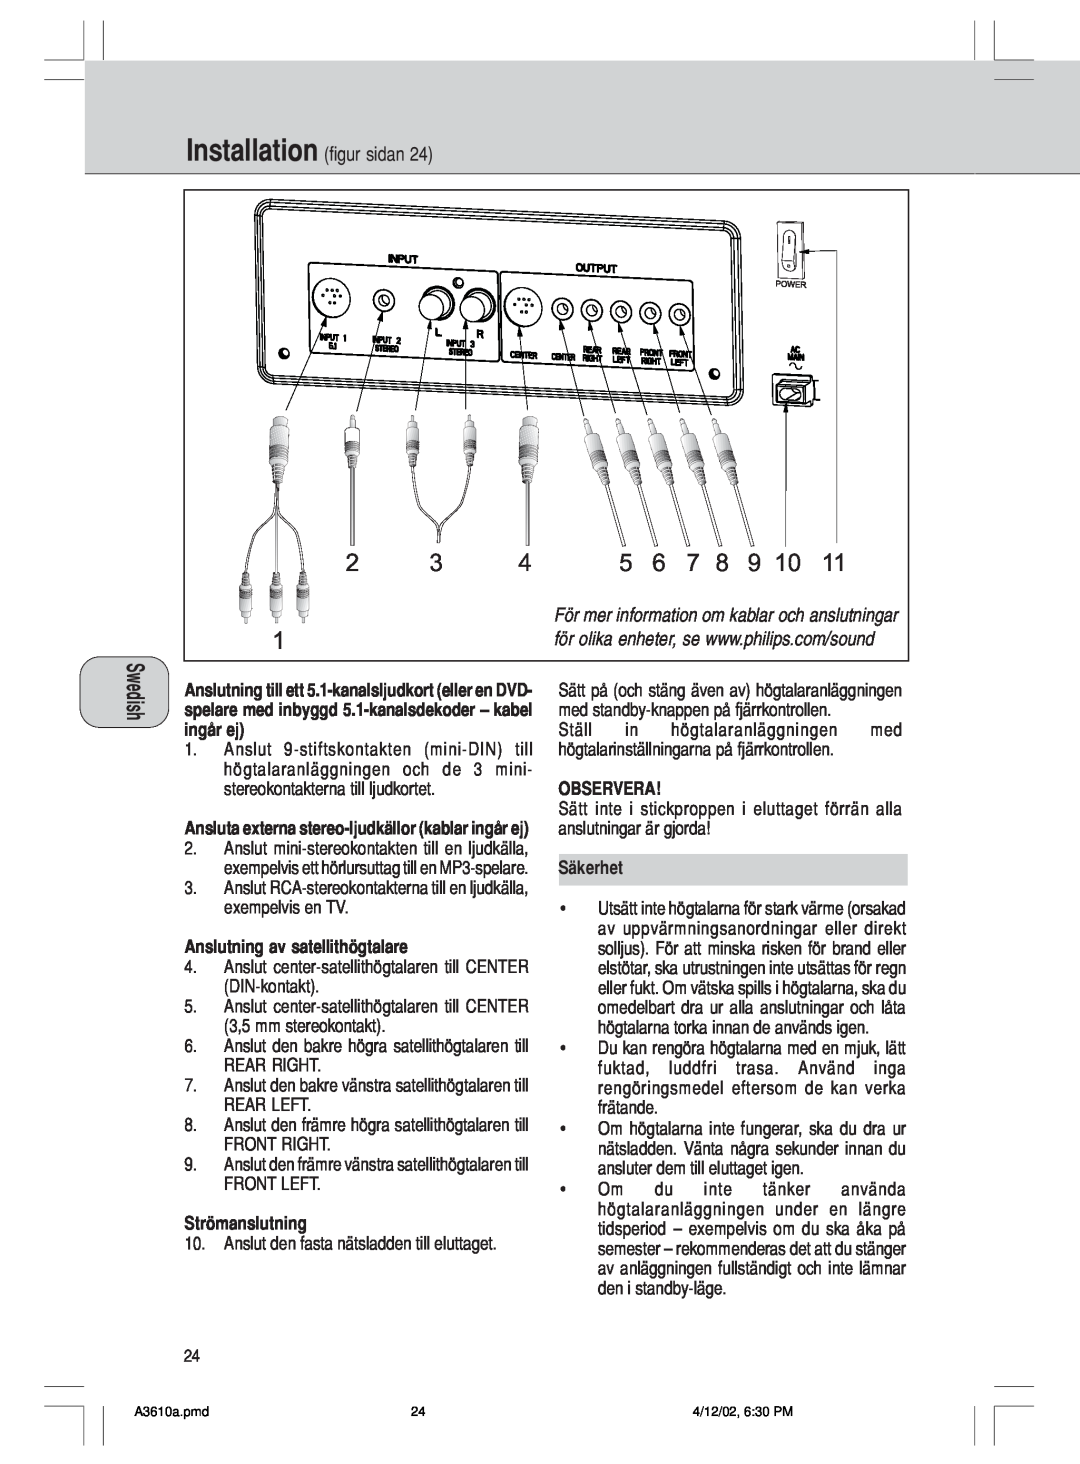 Philips A3.610, MMS316 manual 5 6 7 8, Installation figur sidan 